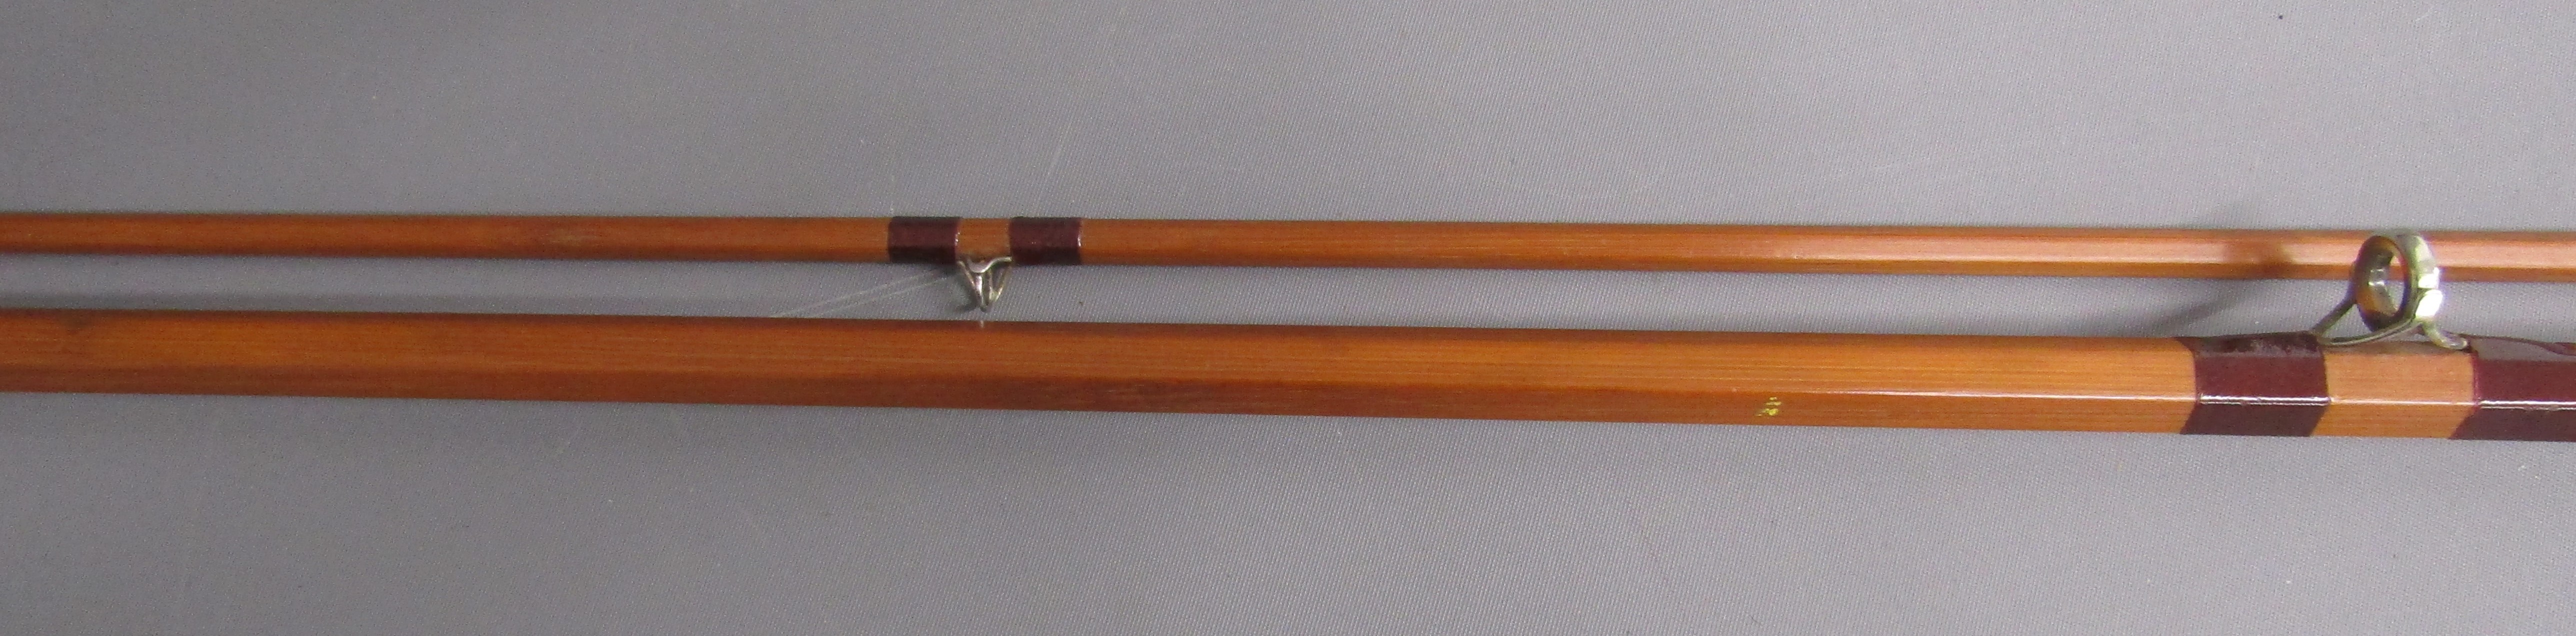 2 x J S Sharpe Ltd Aberdeen 'Scottie' split cane fishing rods - 2 piece 10ft screw joint includes - Image 5 of 9